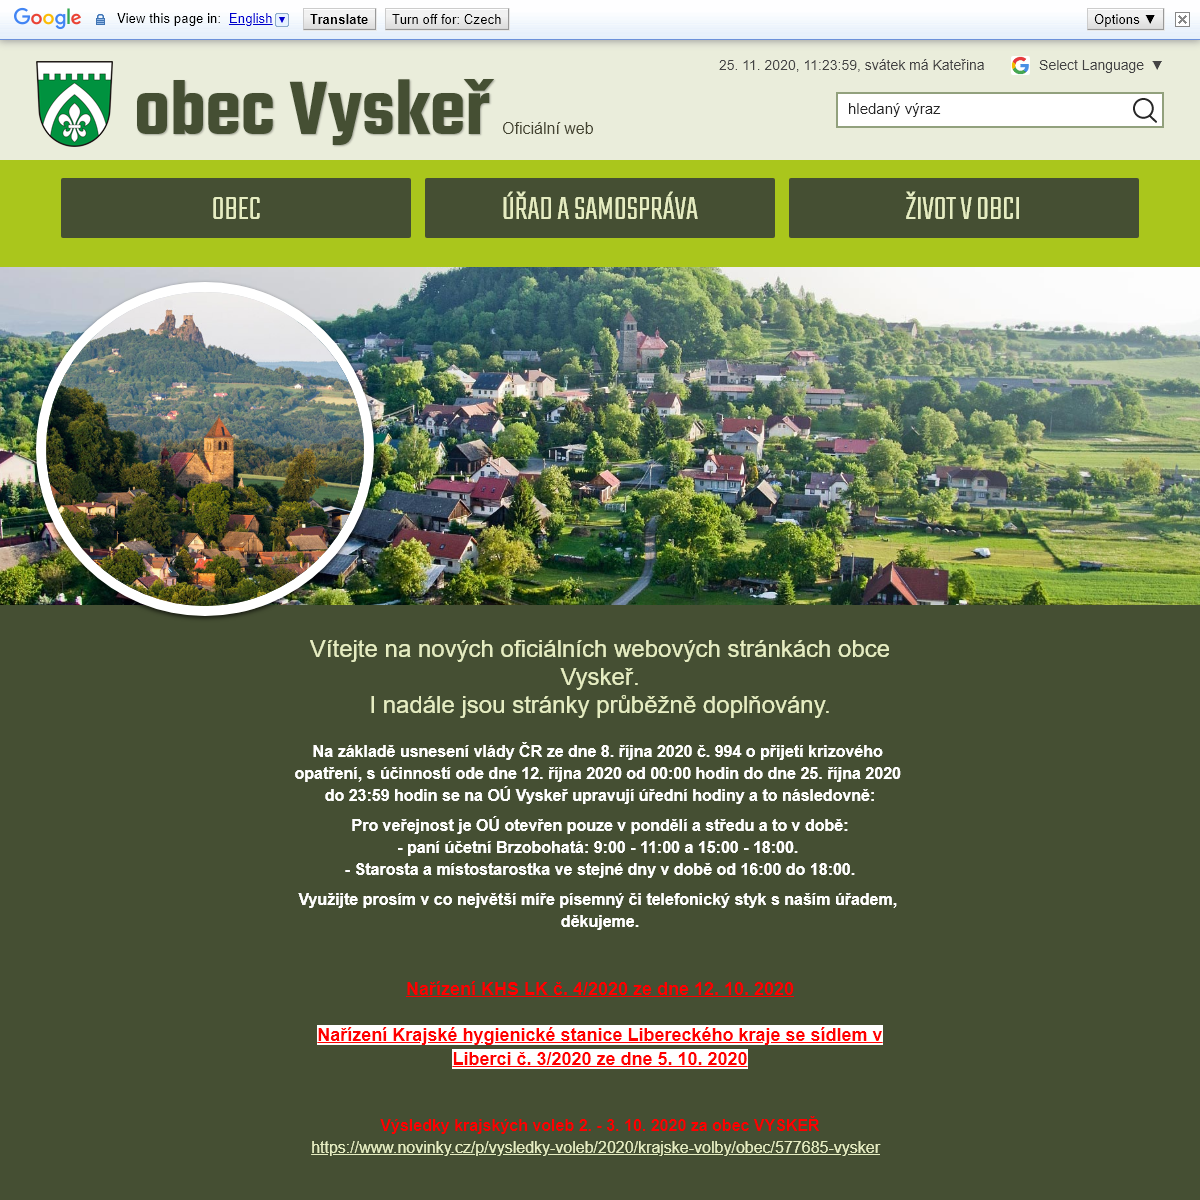 A complete backup of vysker.cz